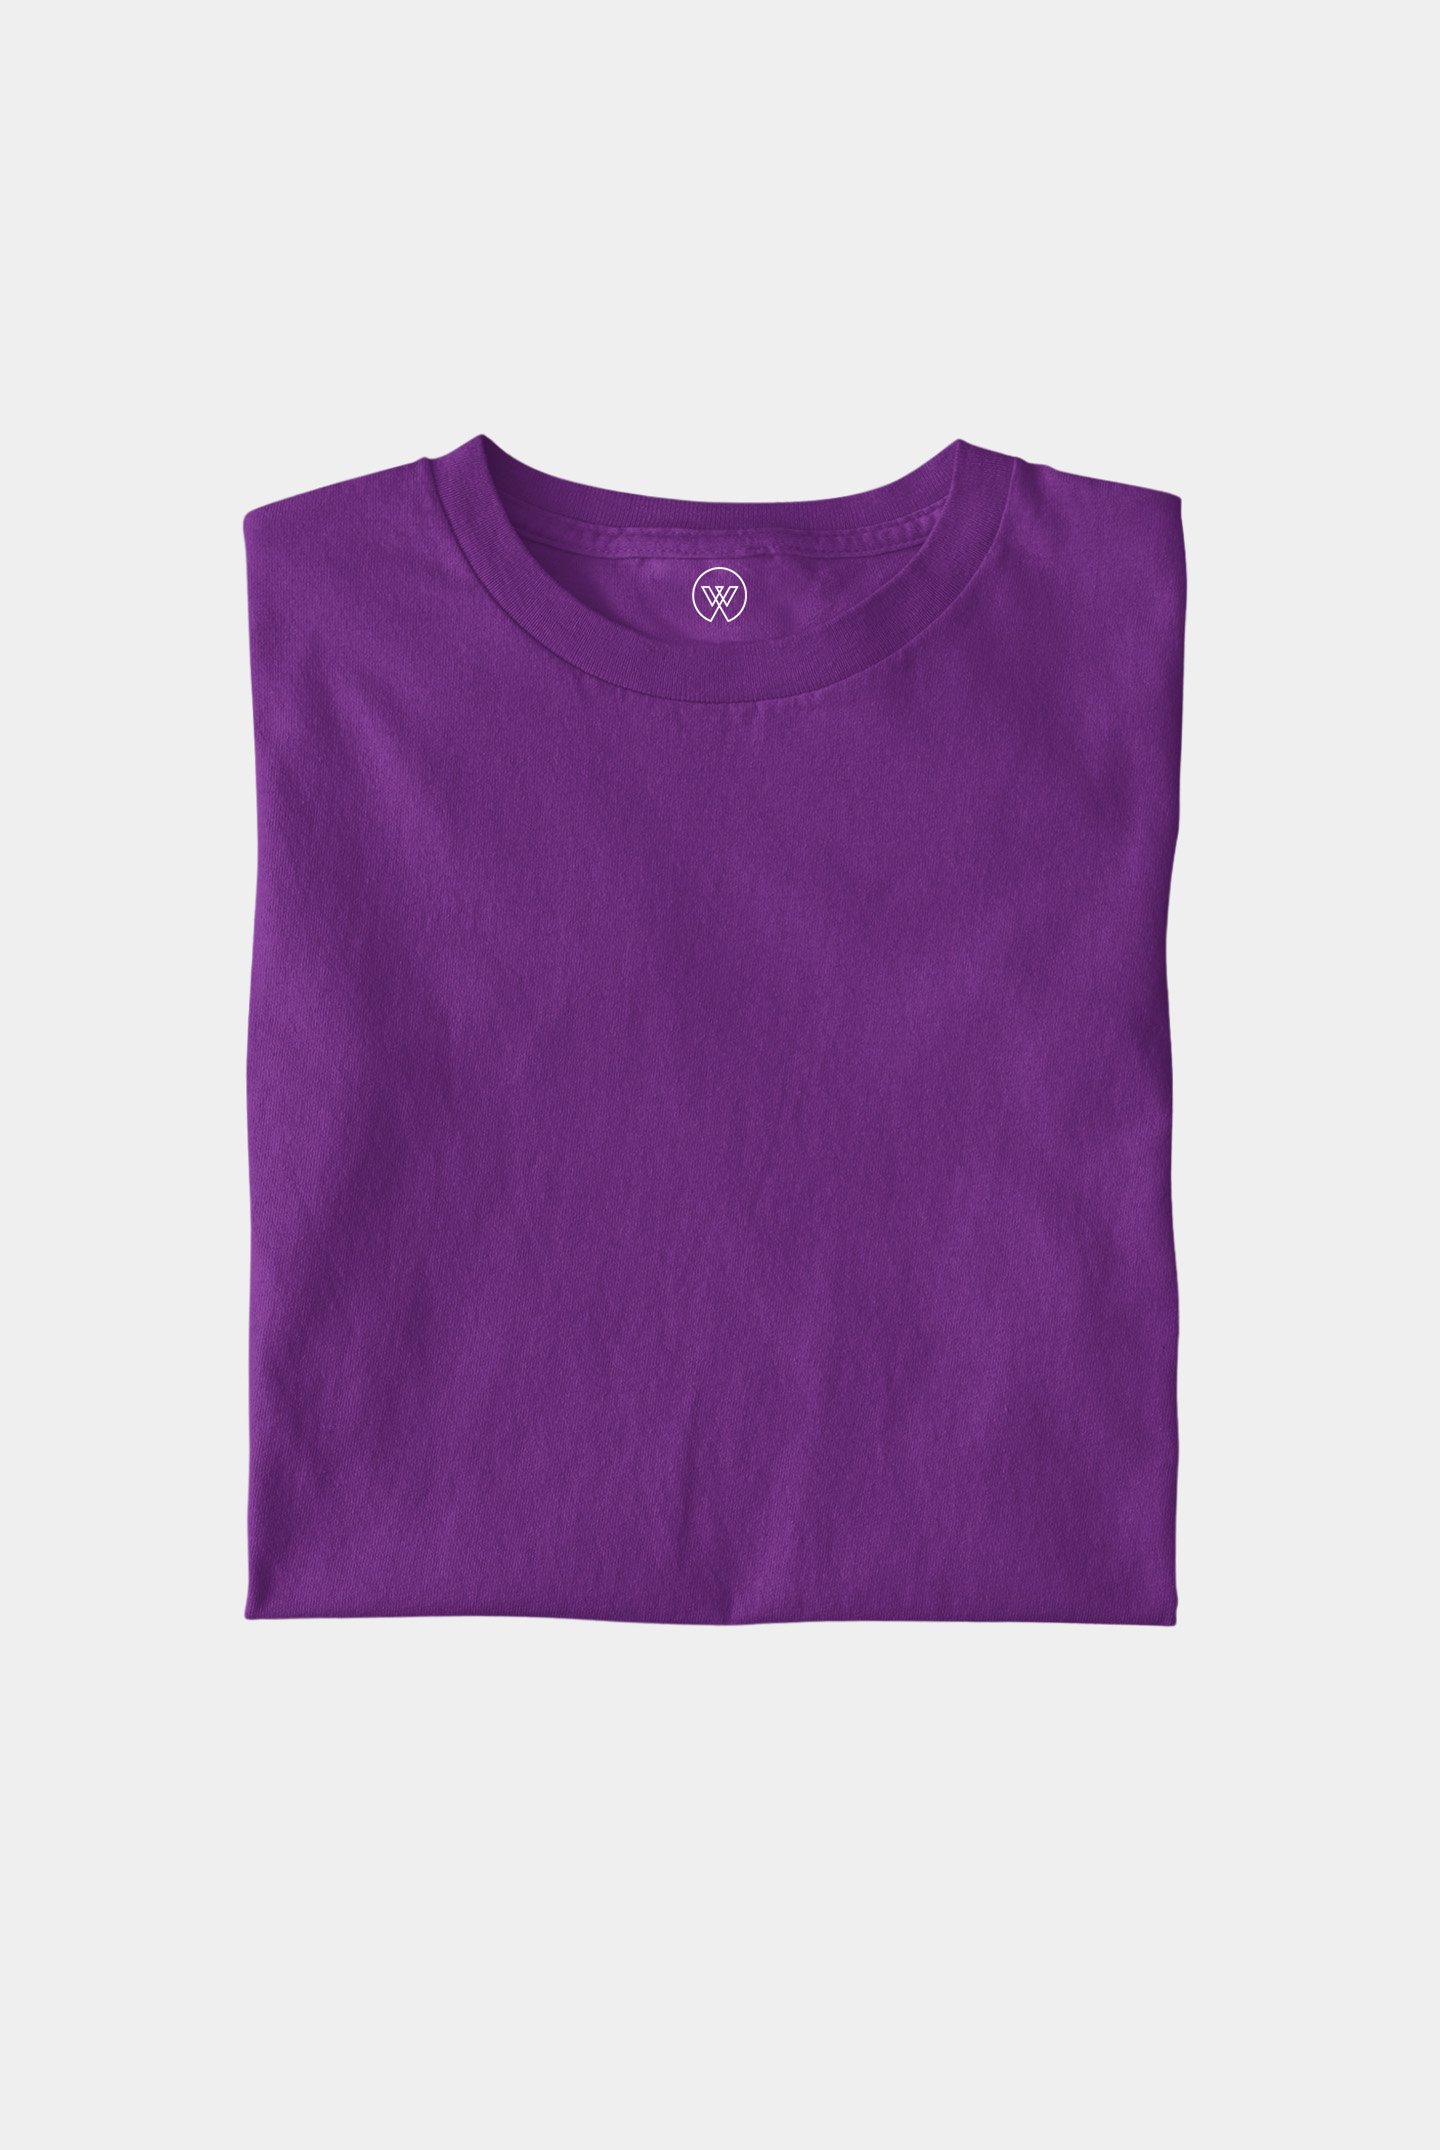 Purple Solid T-Shirt by Wayward Wayz Folded